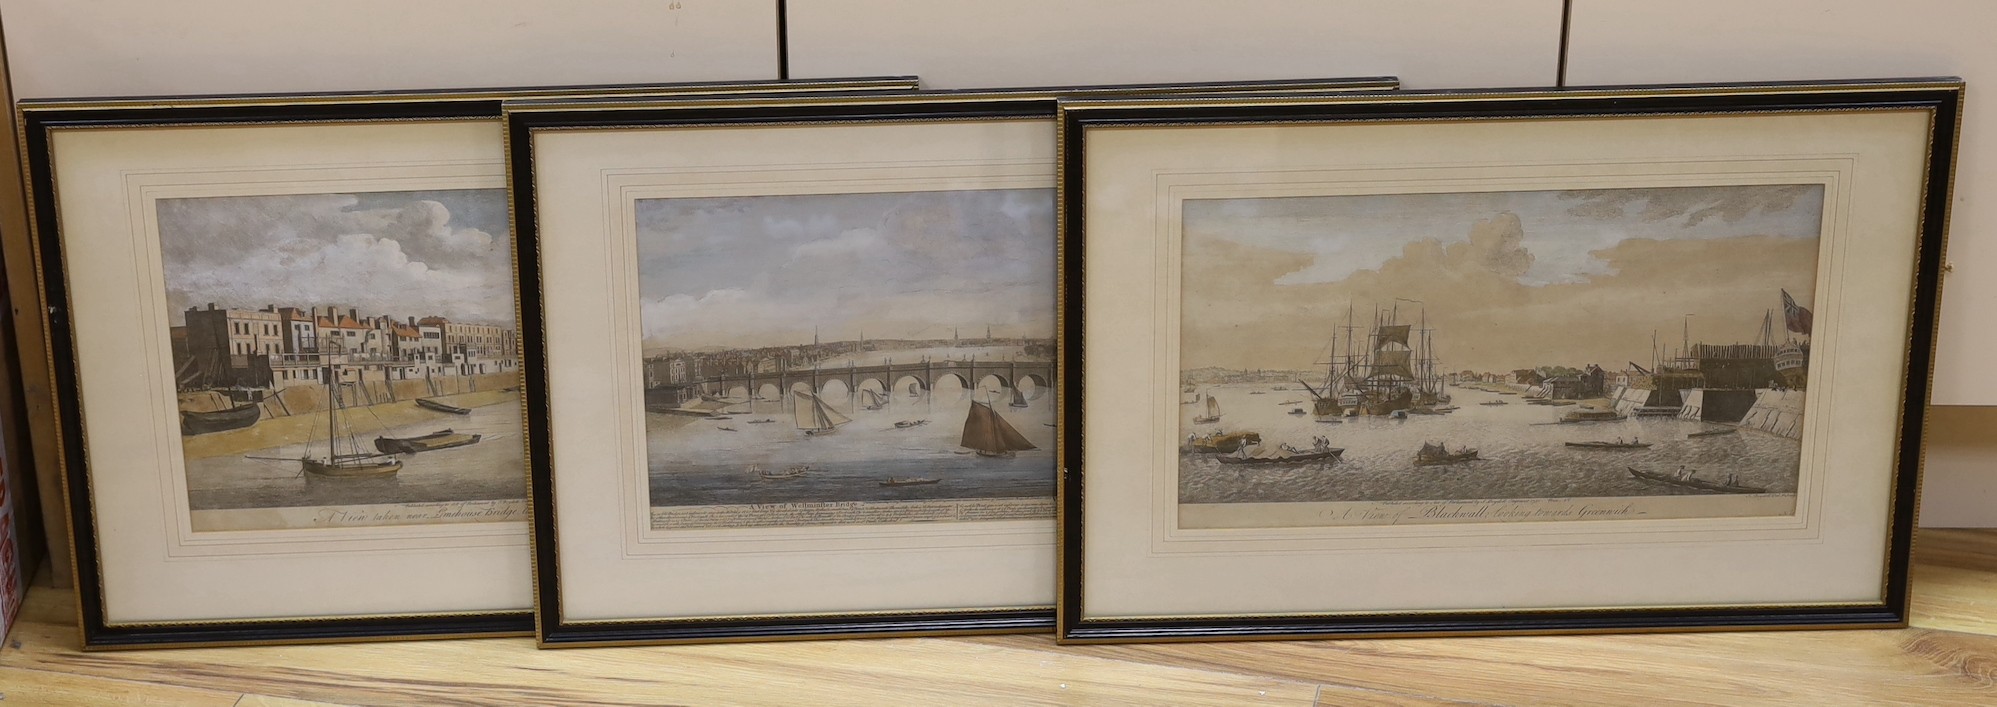 John Boydell, three hand coloured engravings, 'A view near Limehouse Bridge', 'Westminster Bridge' and 'Blackwall', 23 x 41cm                                                                                               